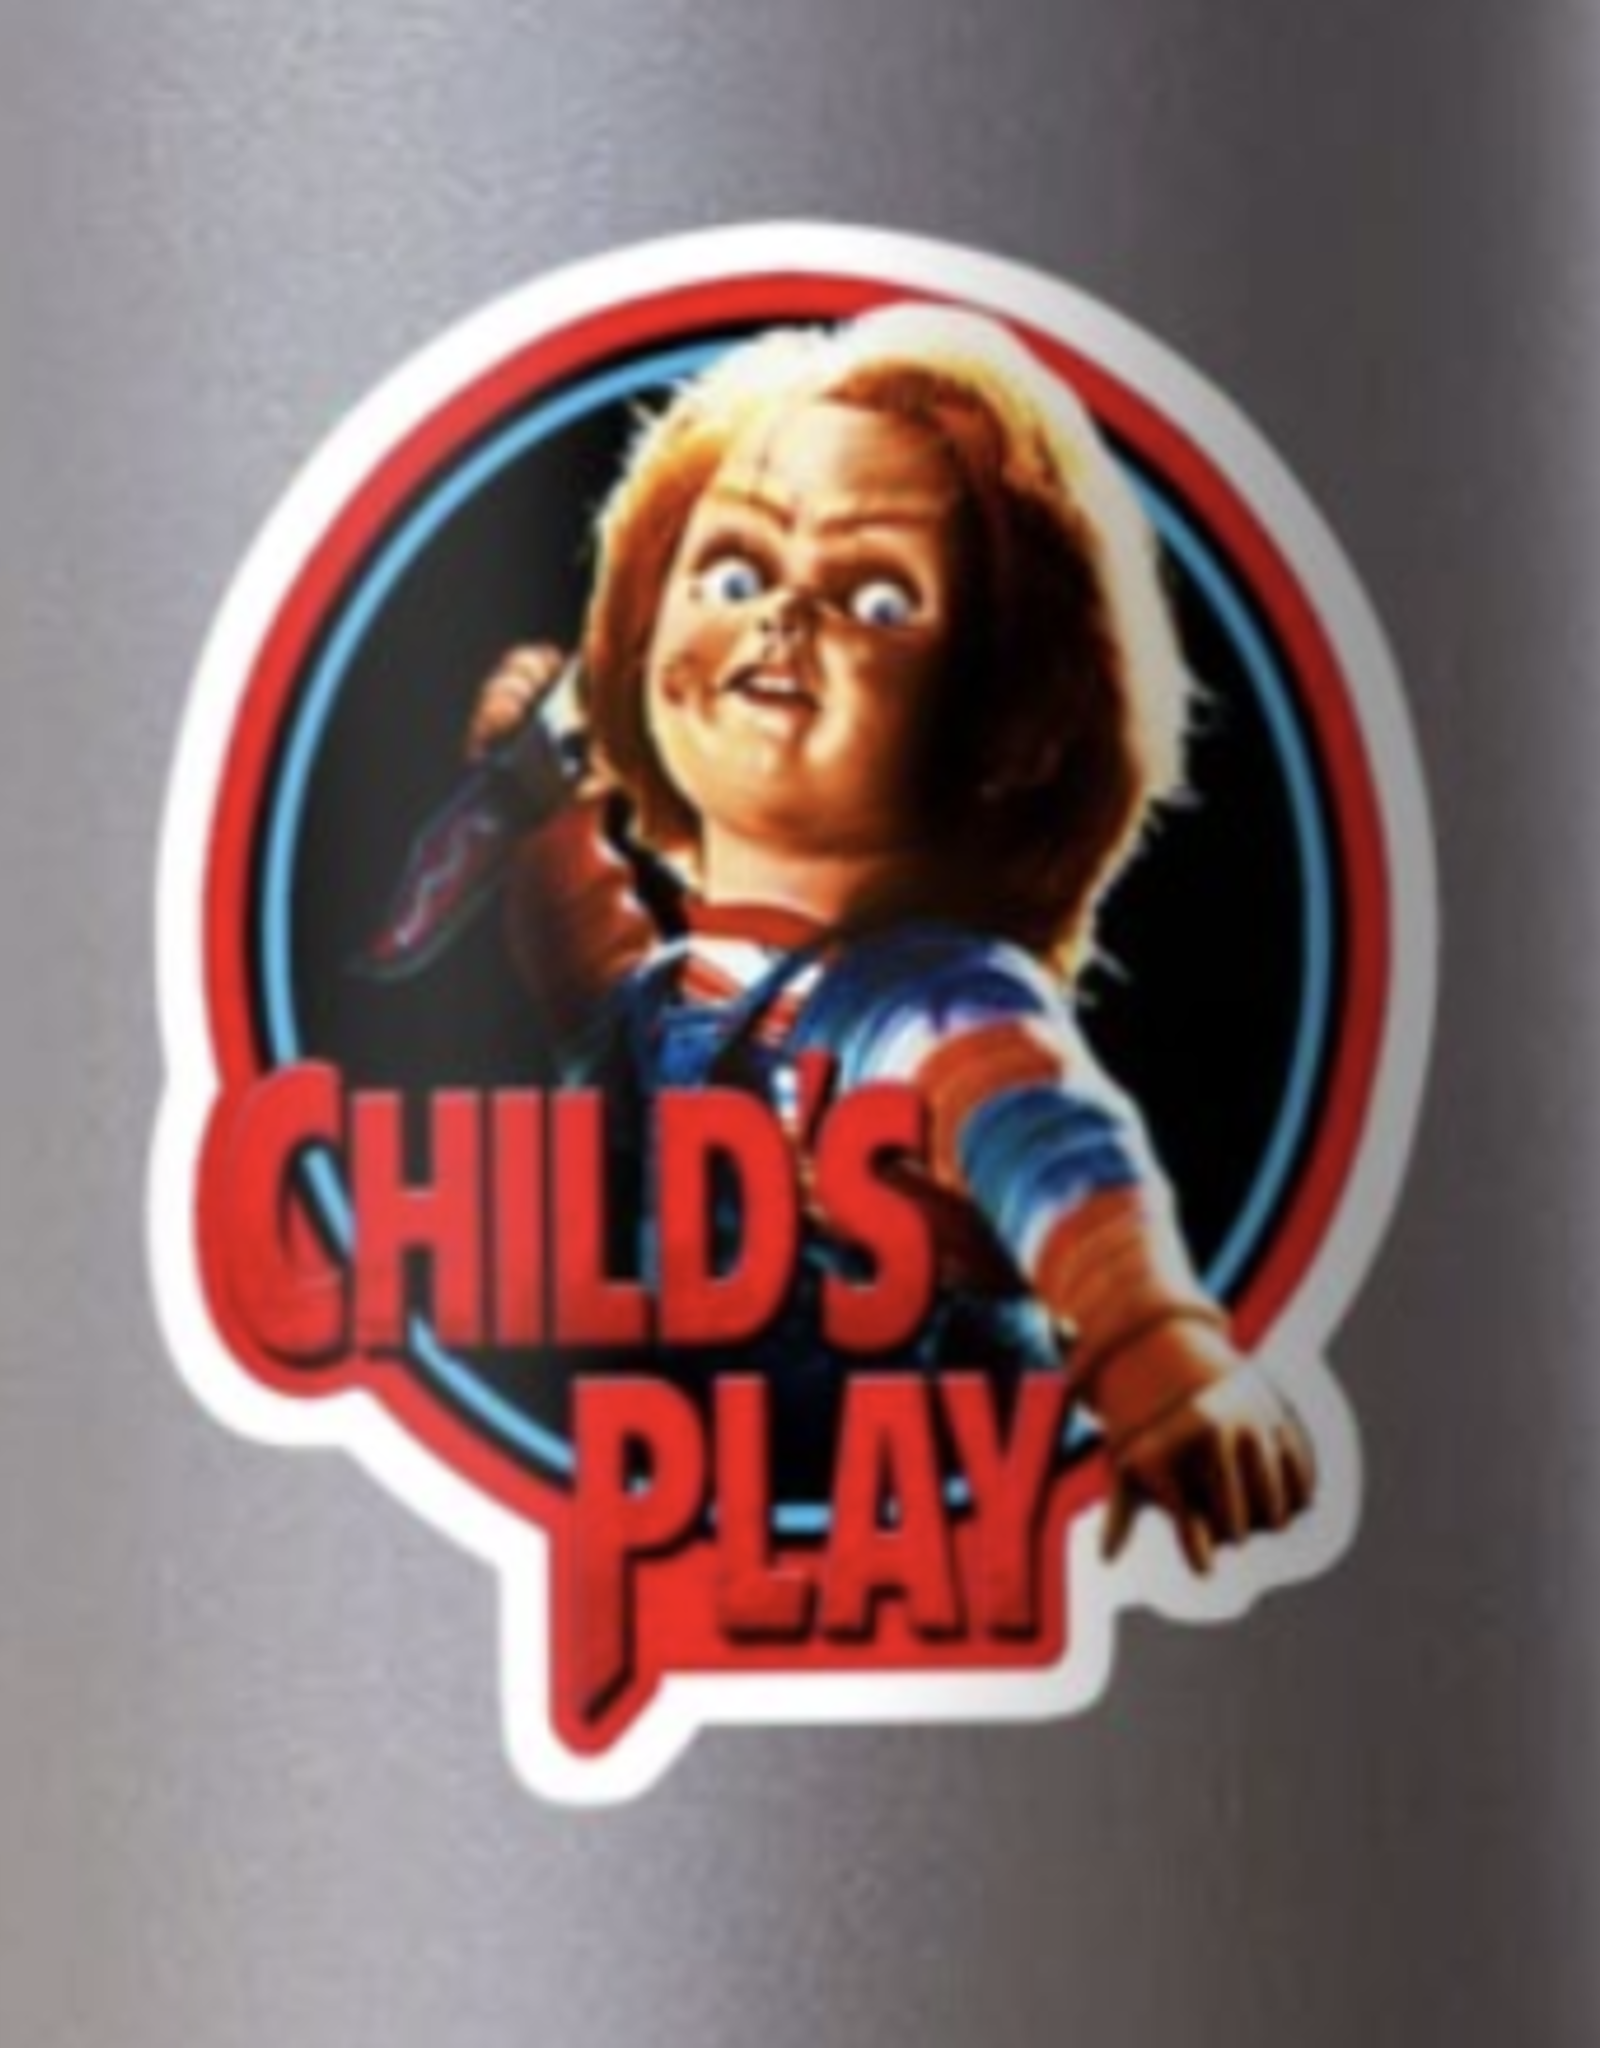 Chucky Sticker